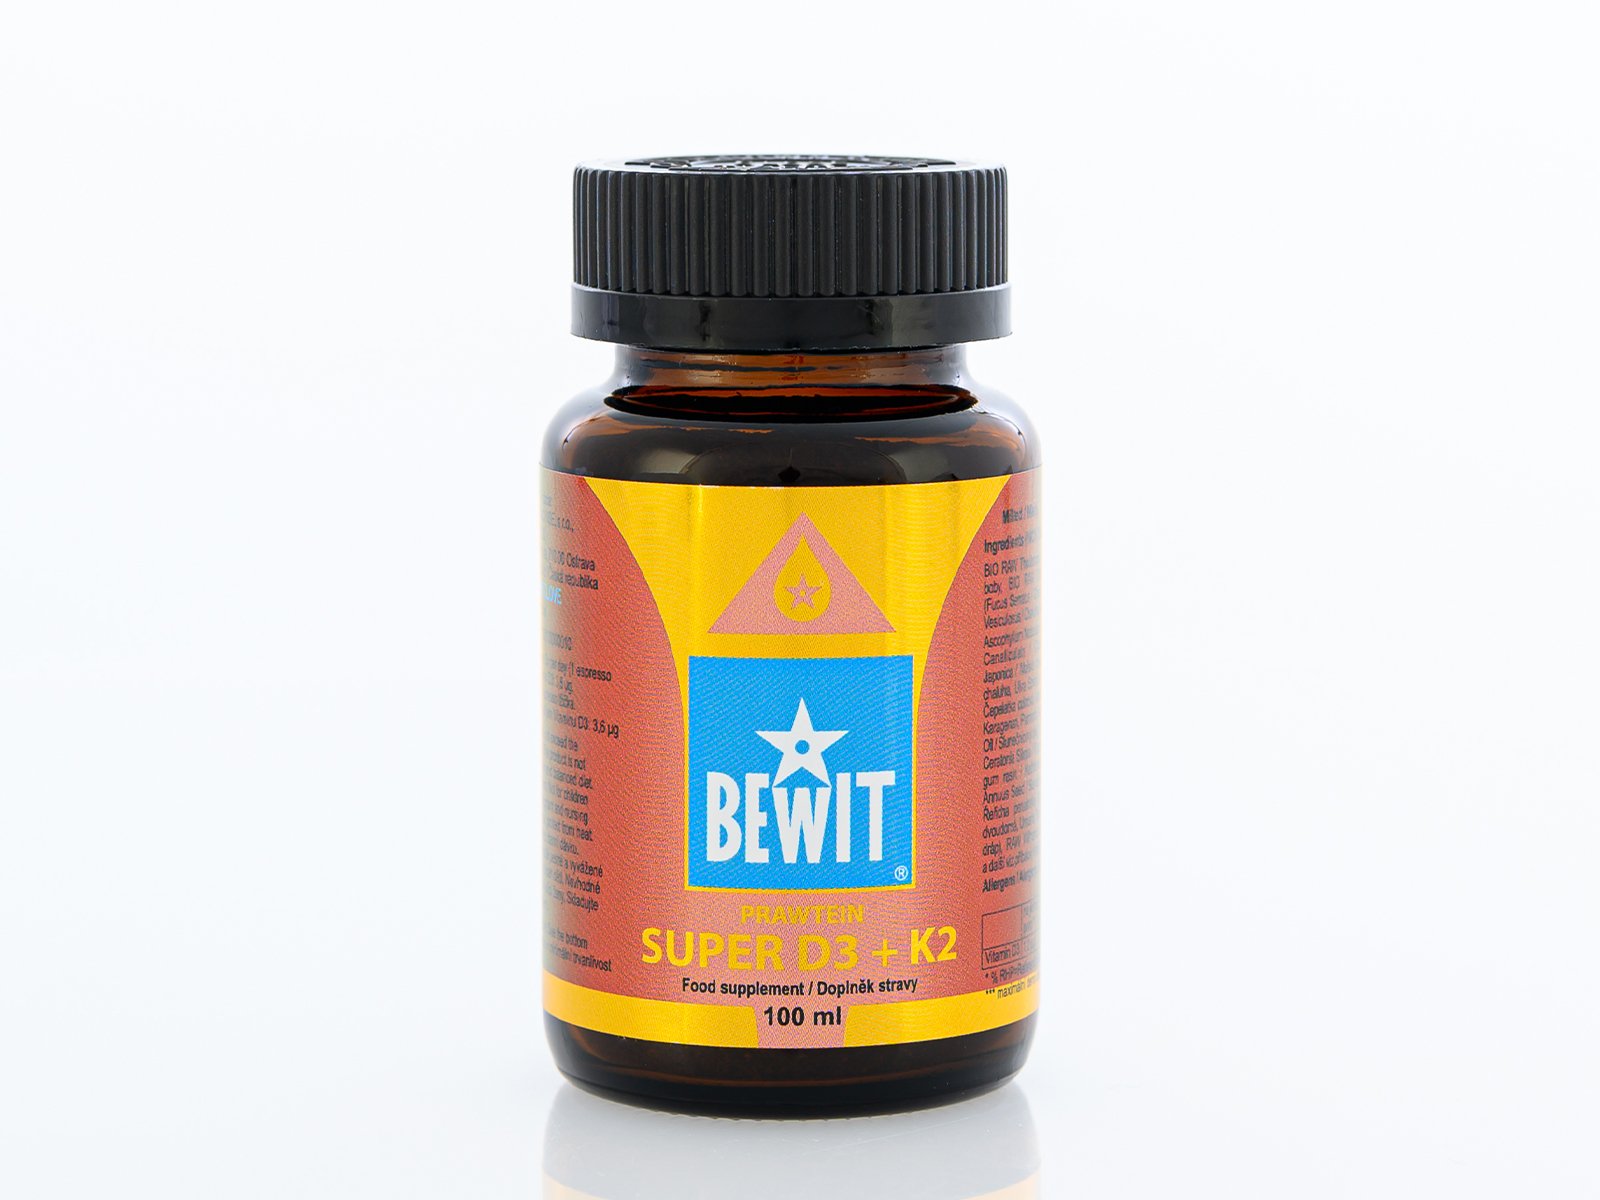 BEWIT PRAWTEIN SUPER D3 PLUS K2 - Food supplement